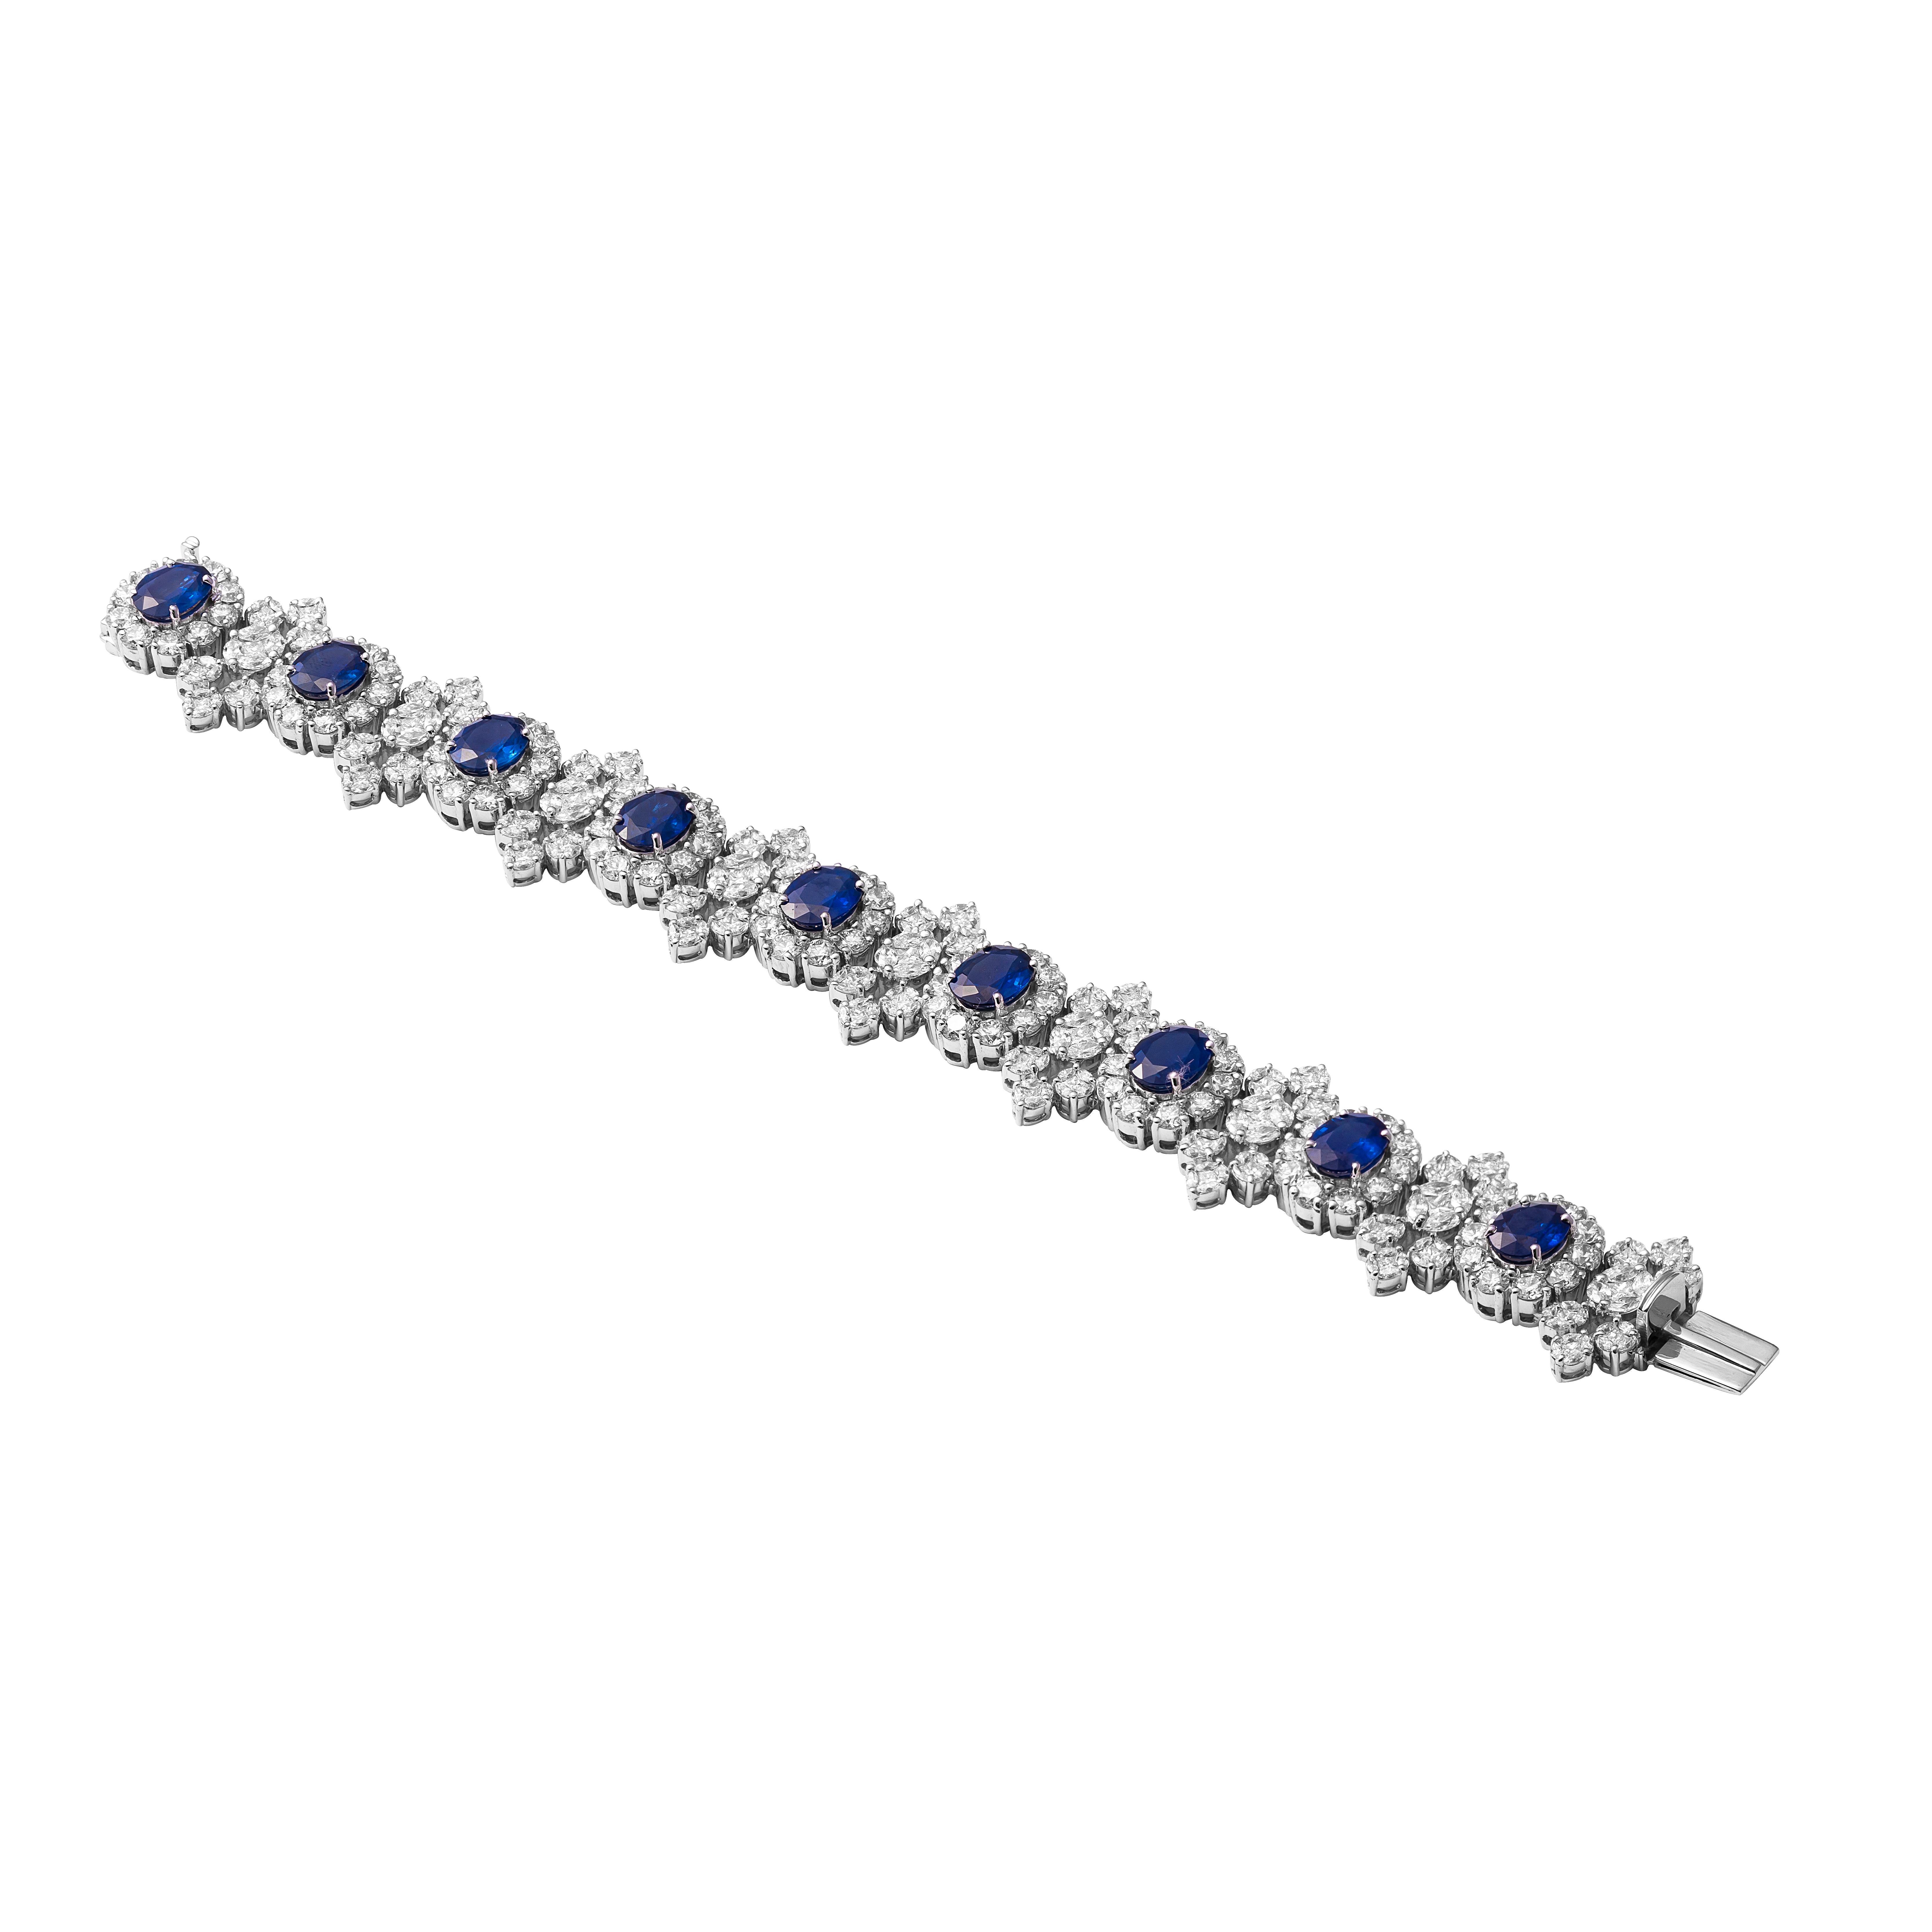 18 Karat White Gold Diamond And Blue Sapphire Bracelet

Beautifully crafted bracelet set in 18 karat white gold, studded with royal blue sapphires and VVS quality diamonds. 

18 Karat Gold - 52.396gms
Blue Sapphire - 17.48cts 
Diamonds - 21.79cts